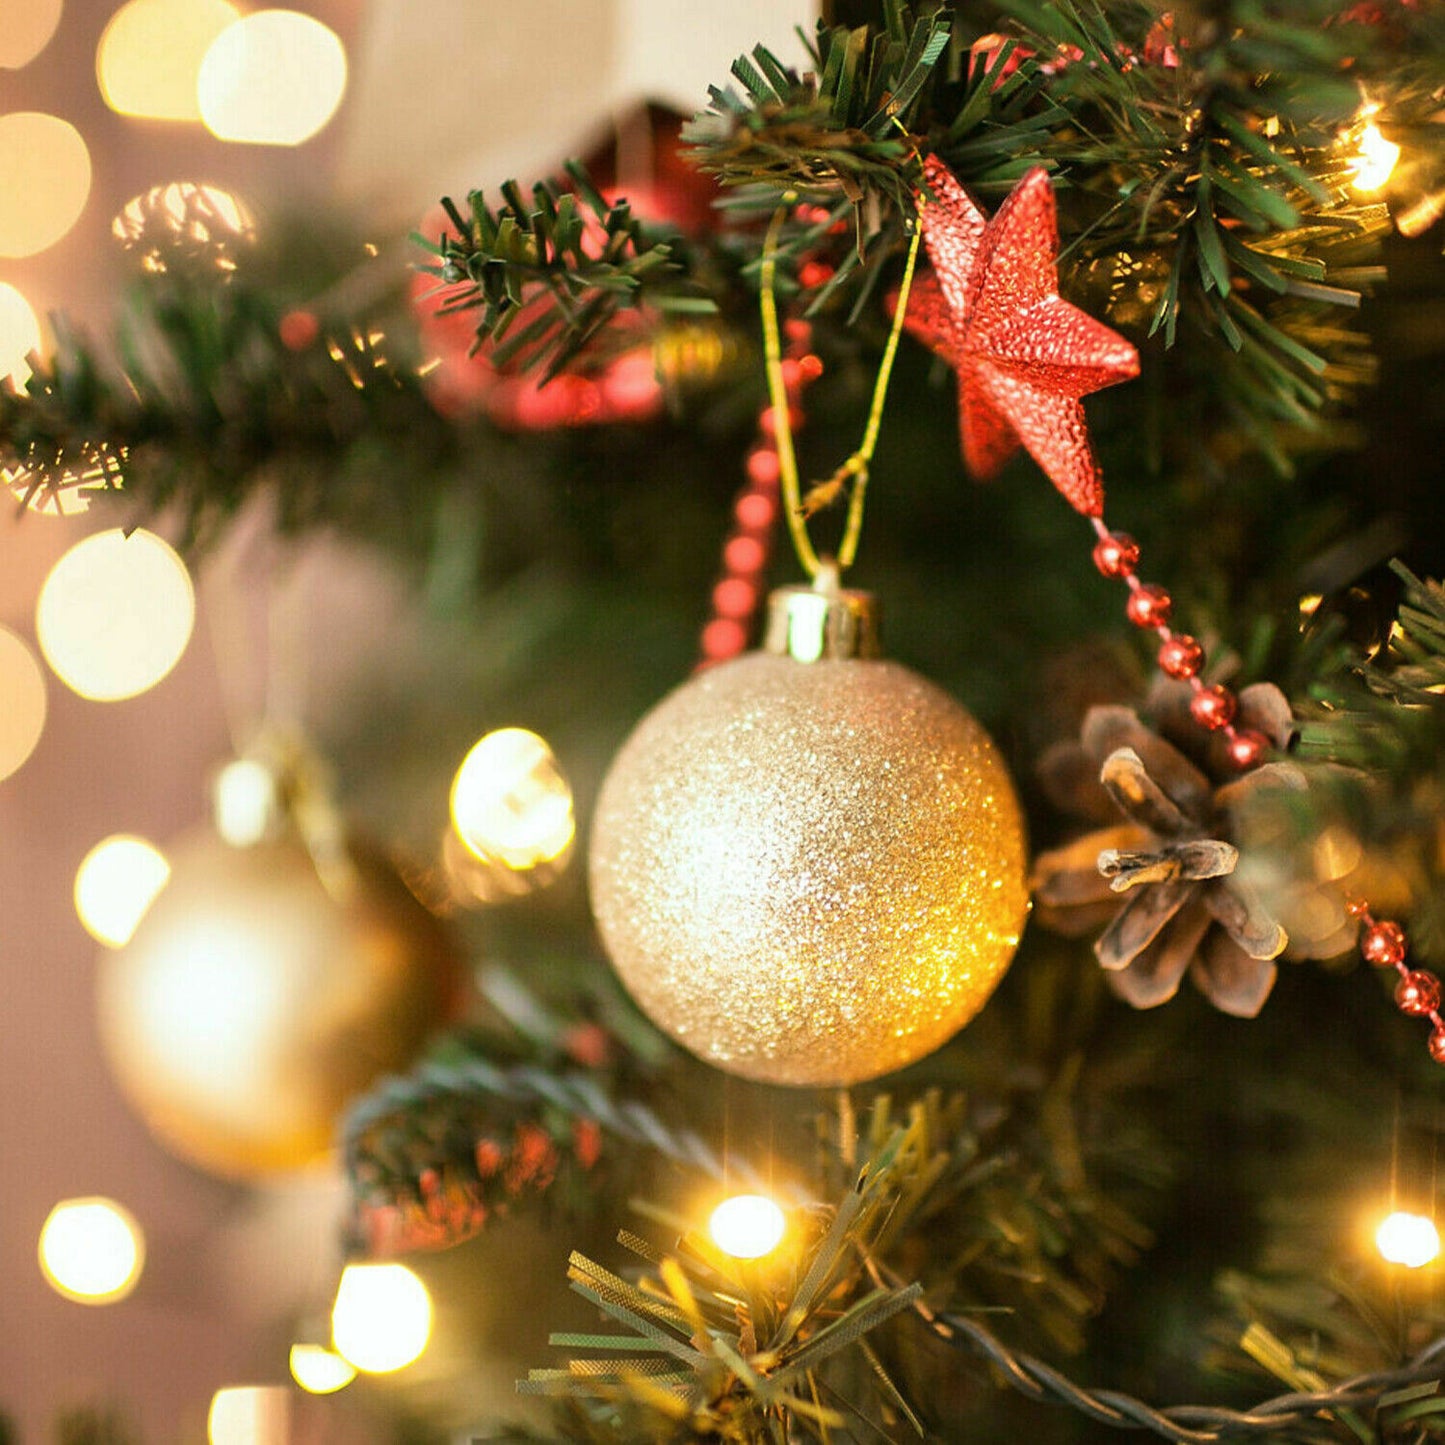 24Pcs/Box Christmas Glitter Ball Ornaments